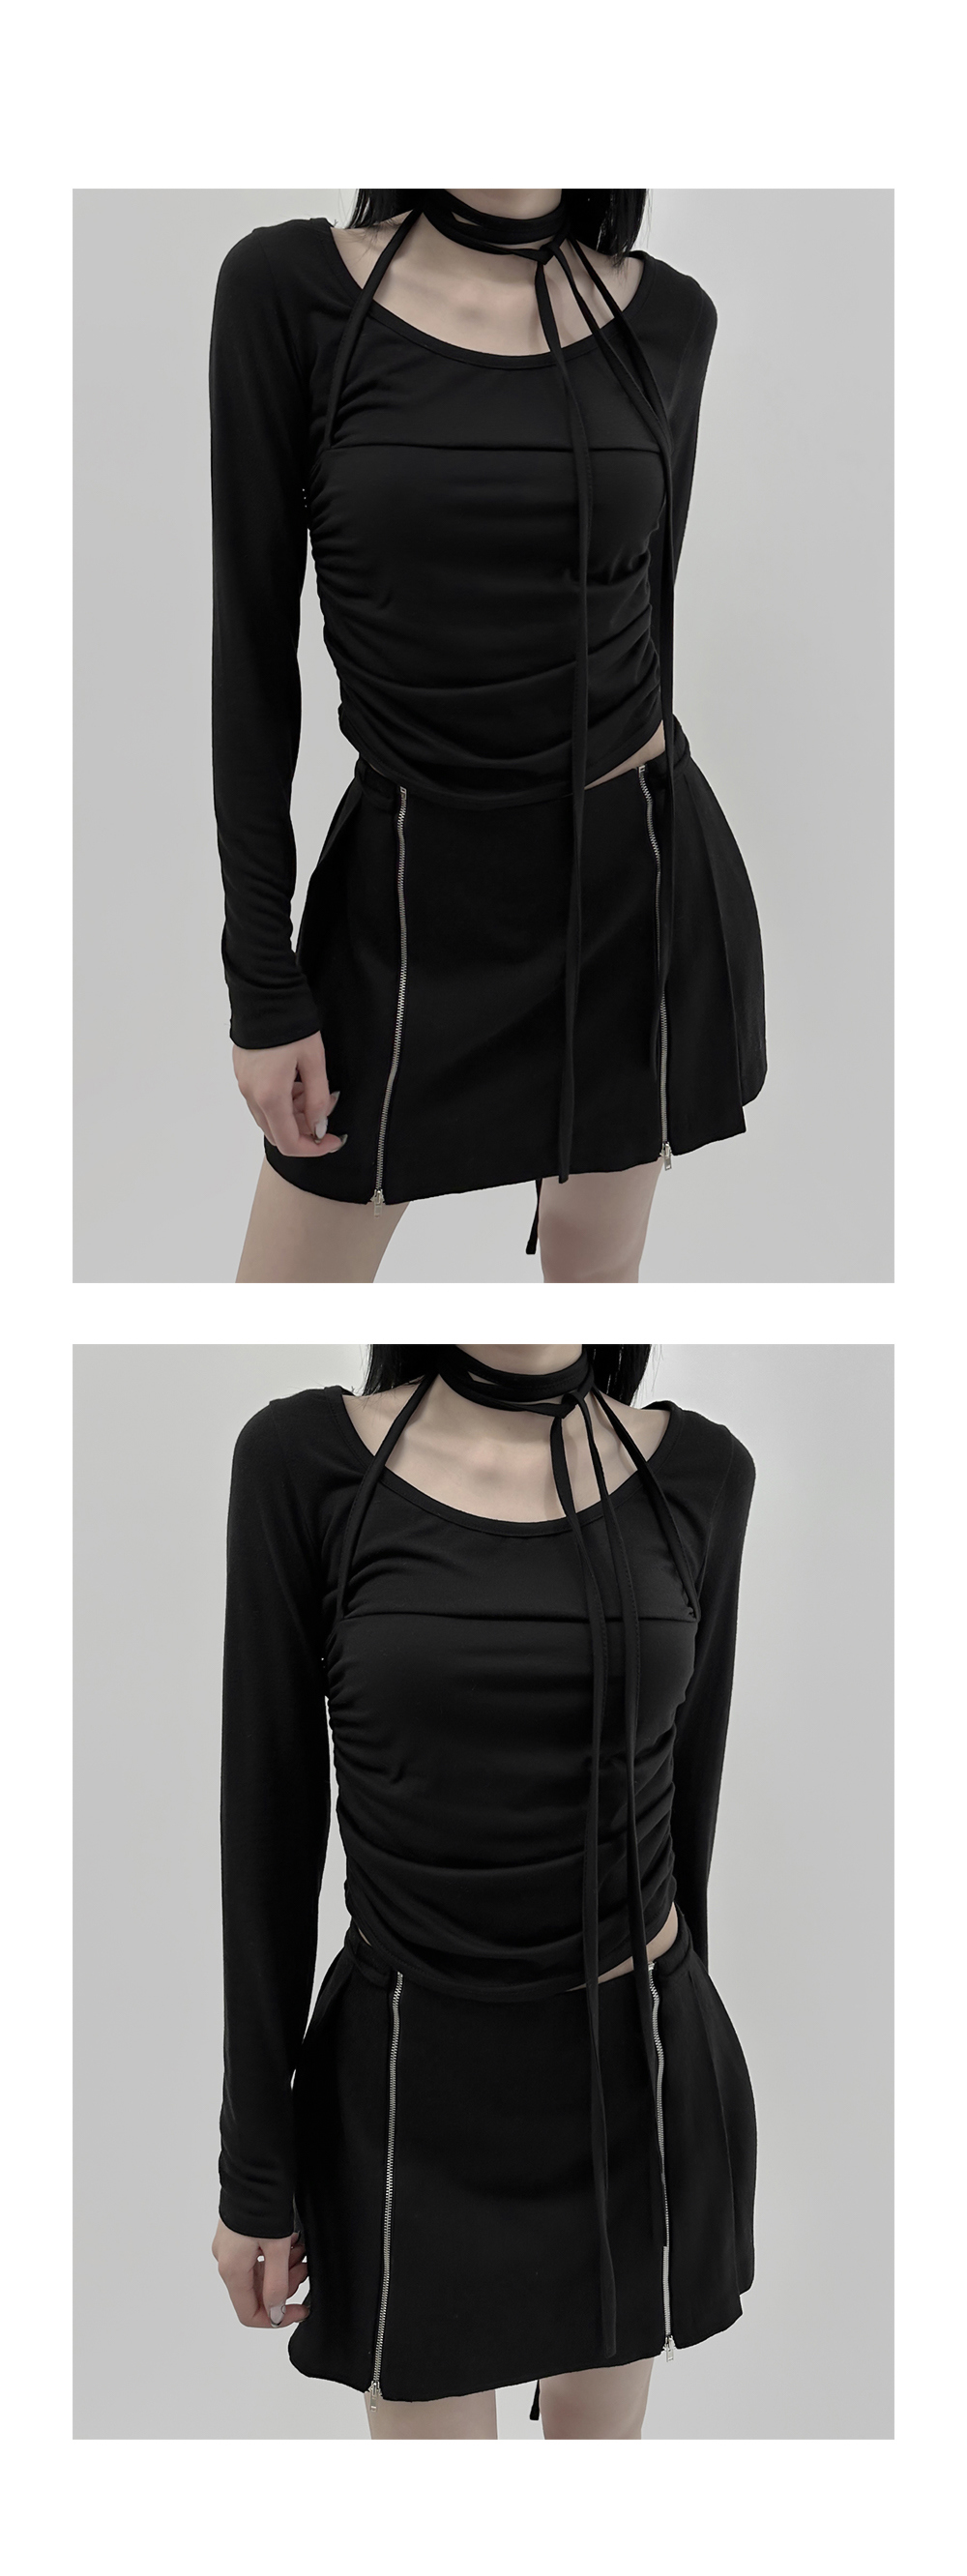 mini skirt charcoal color image-S1L7